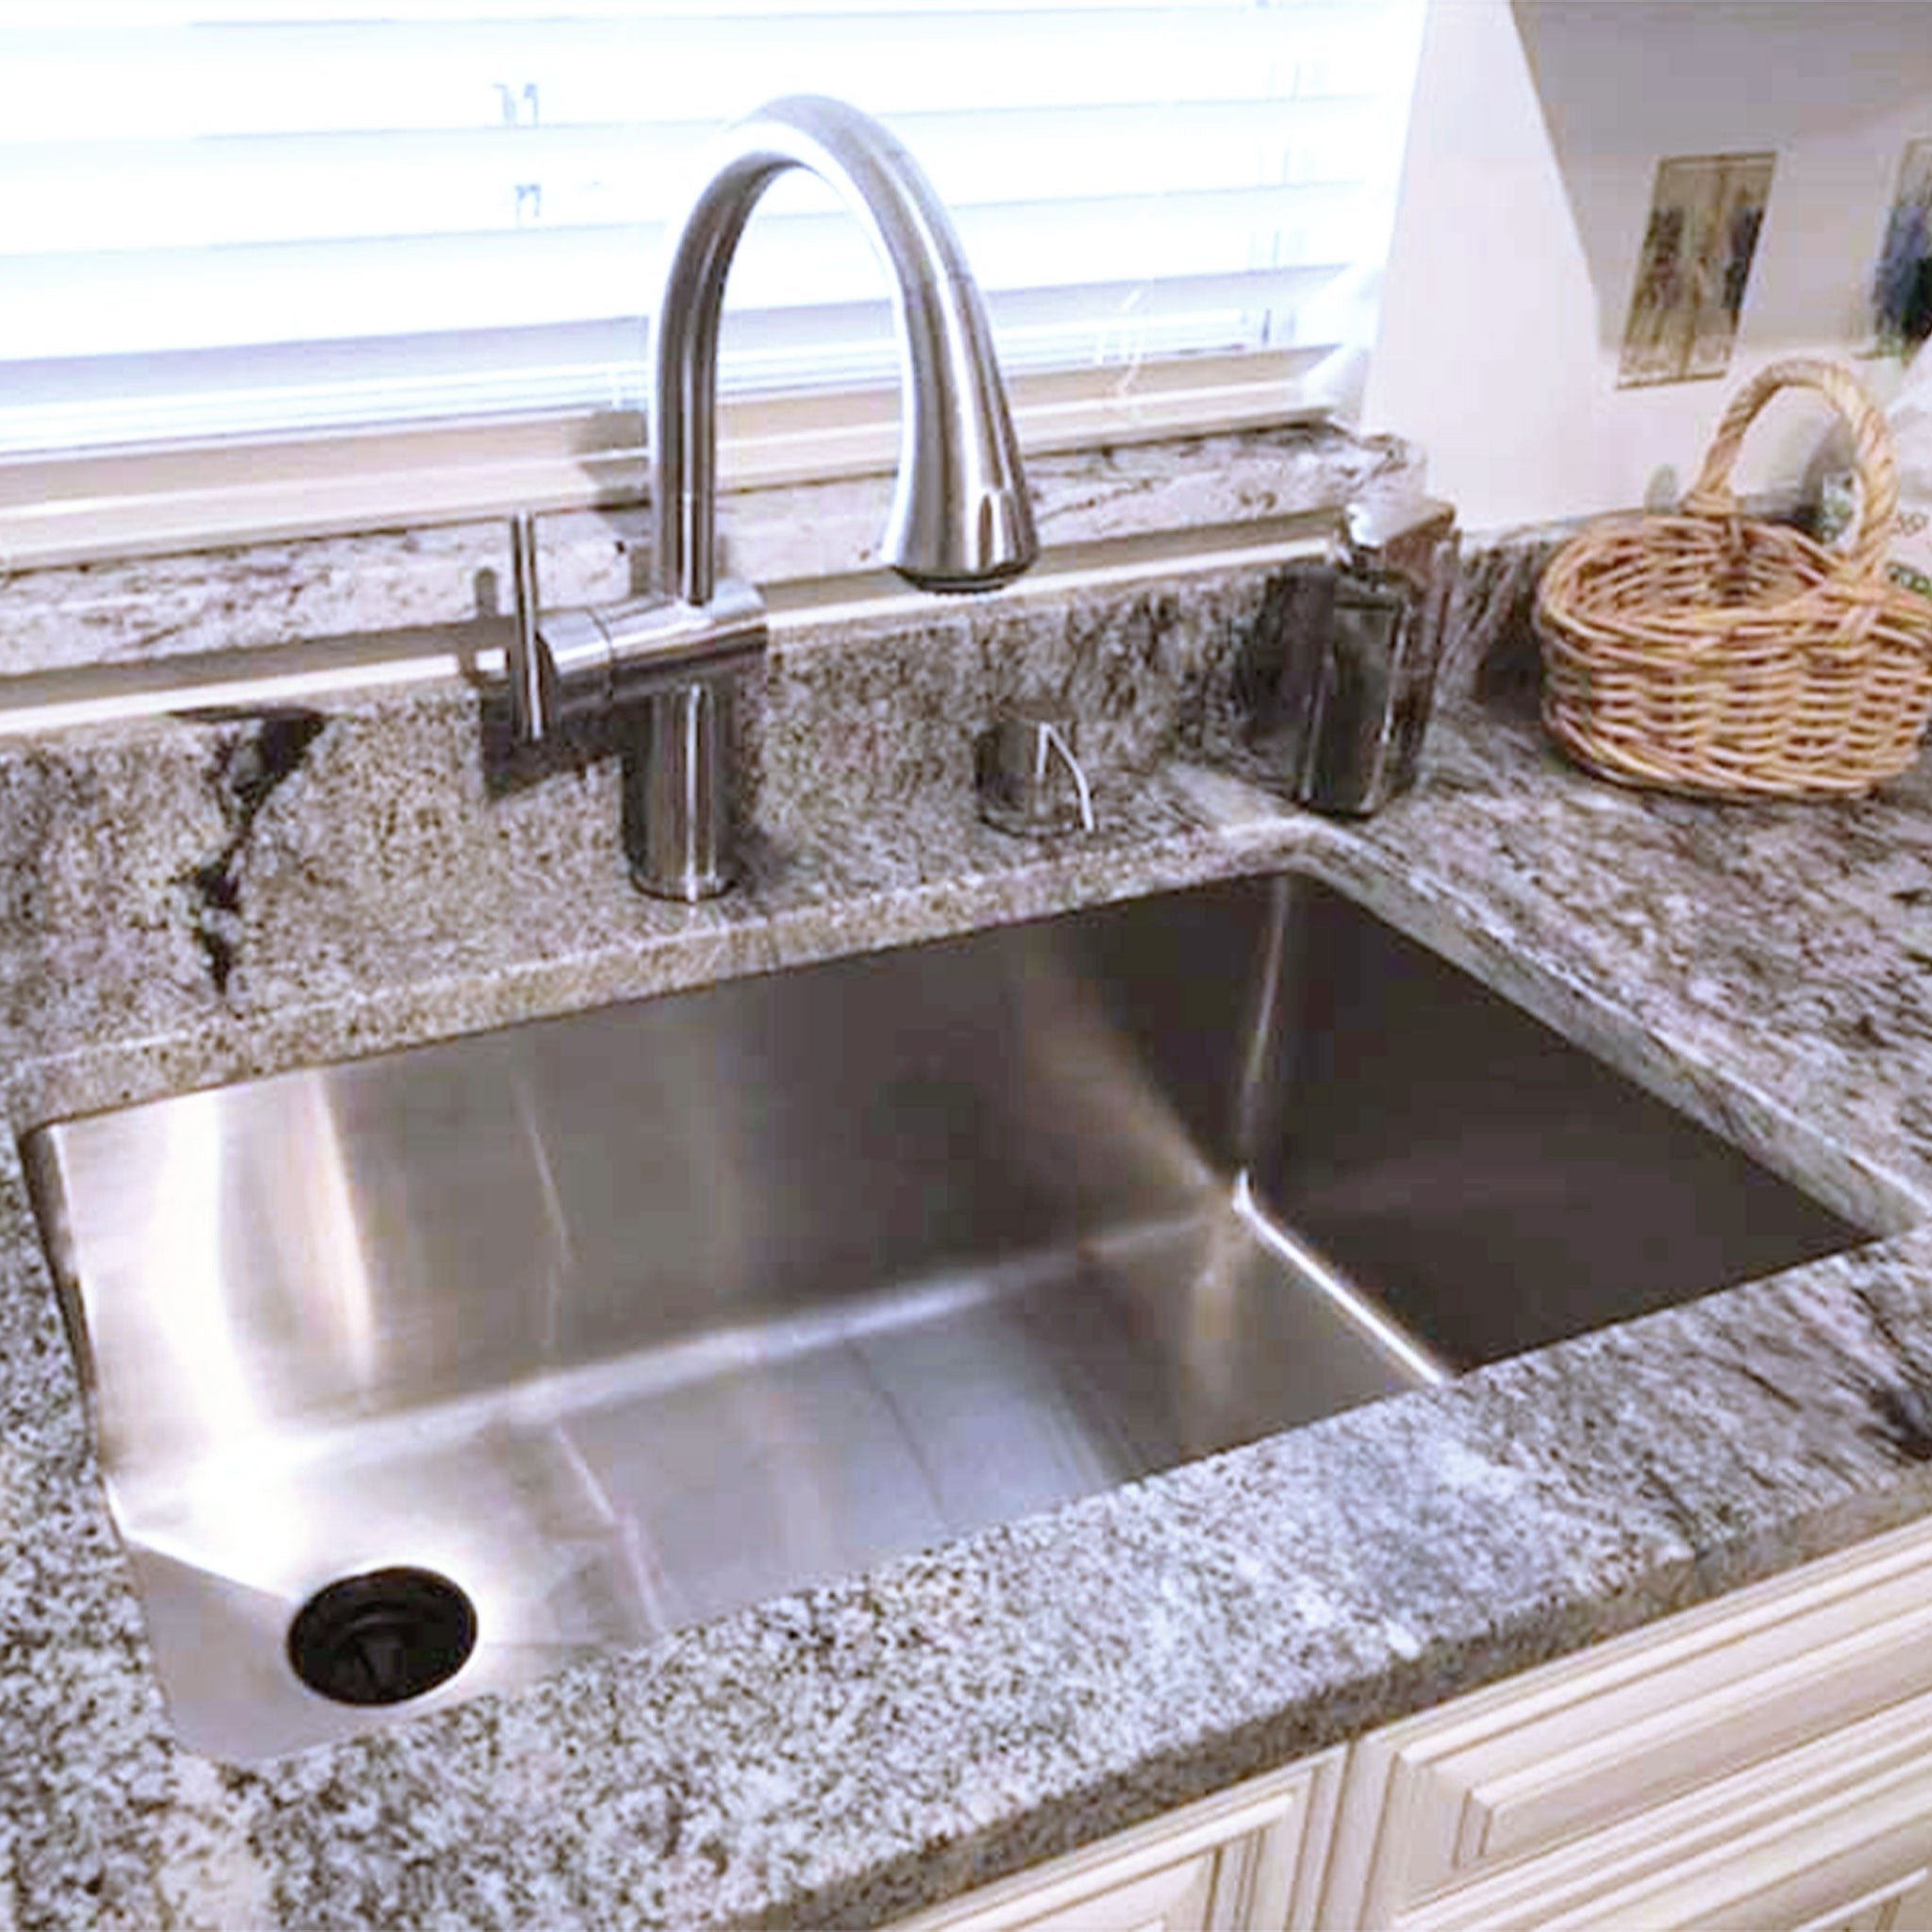 32" Undermount Stainless Steel Classic Kitchen Sink with an offset corner drain.